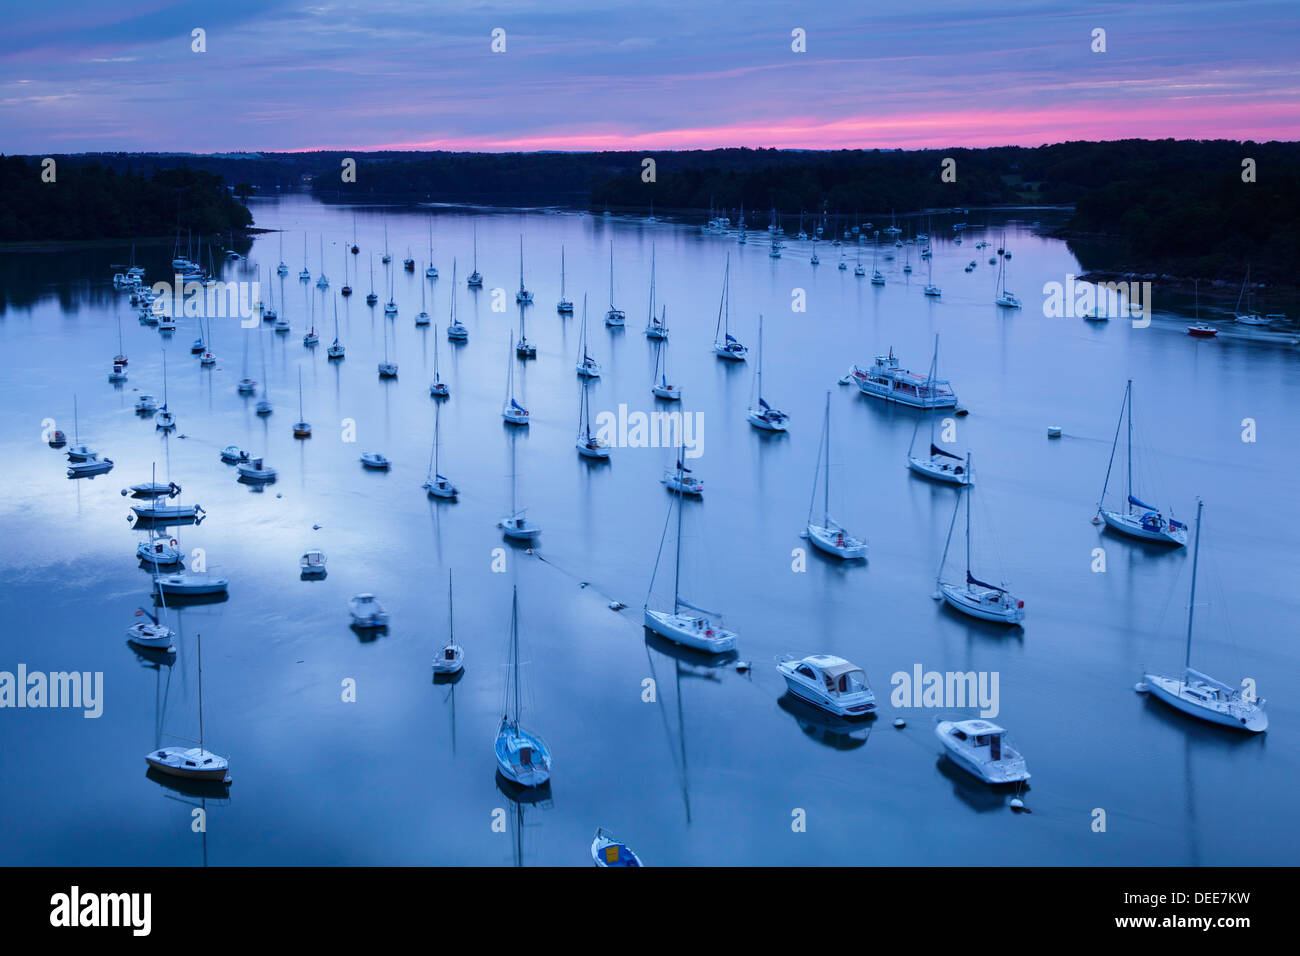 Bateaux à voile sur l'Odet, Benodet, Finistère, Bretagne, France, Europe Banque D'Images